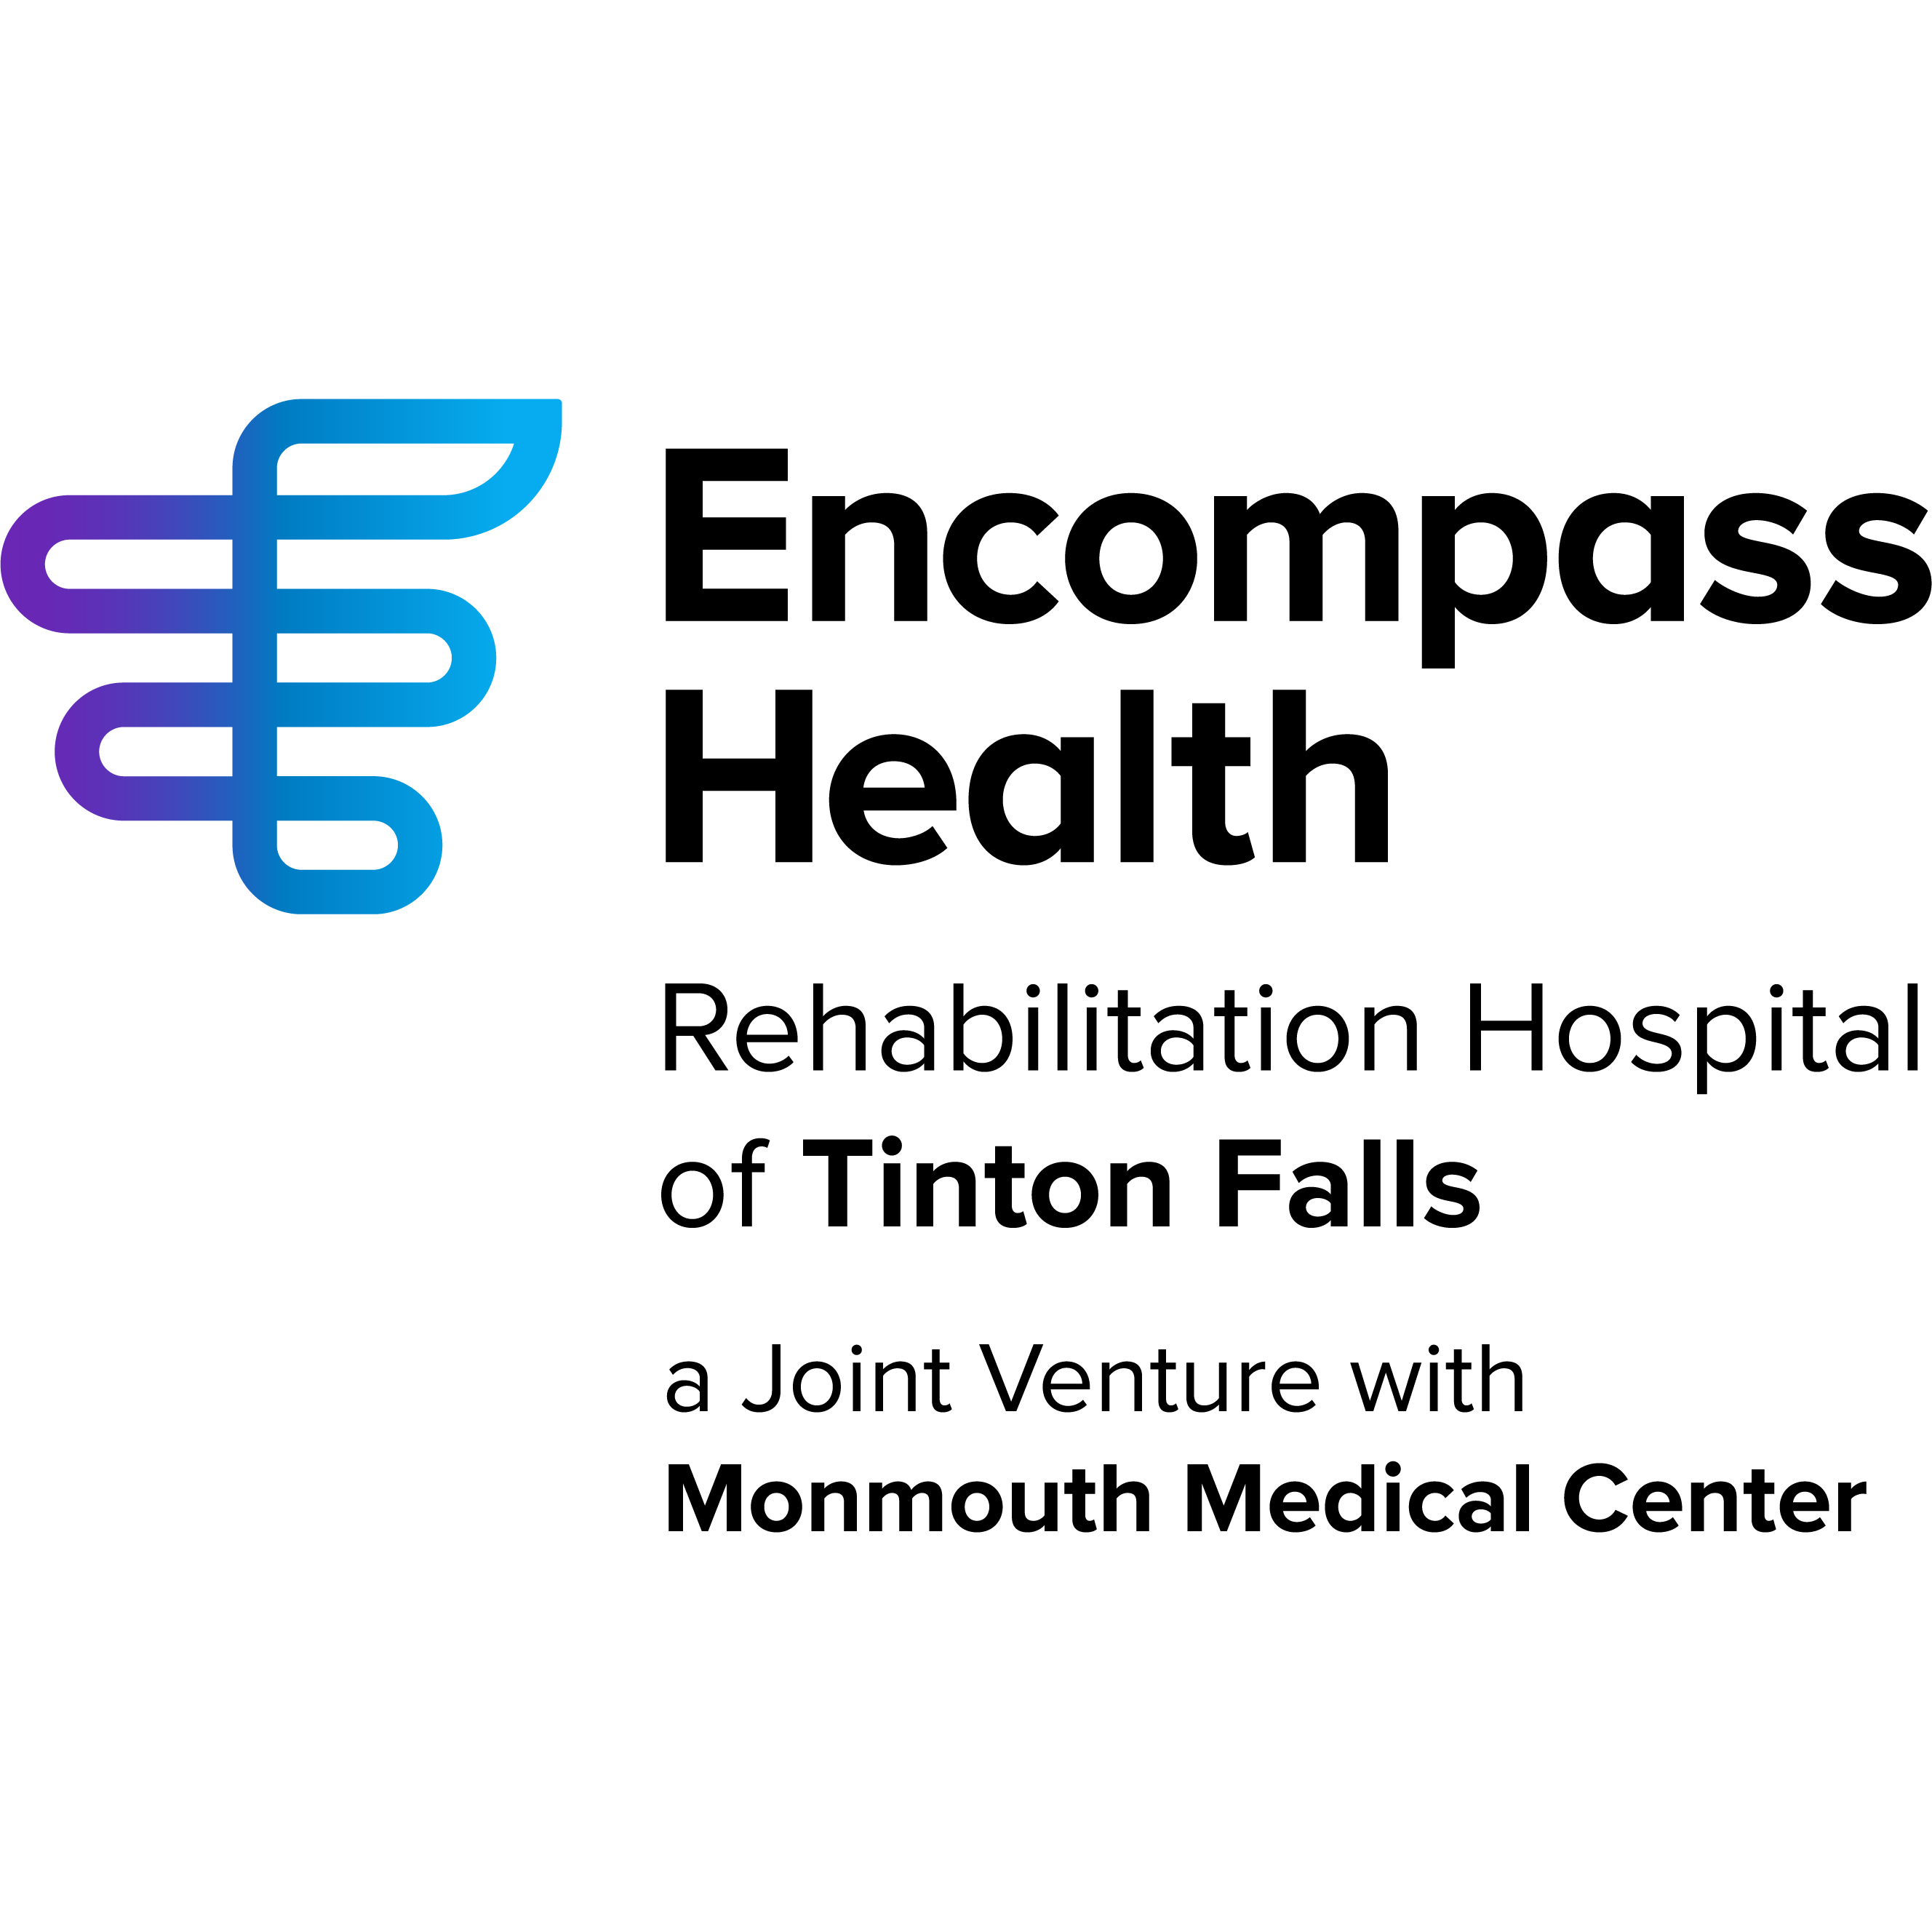 Encompass Health Rehabilitation Hospital of Tinton Falls